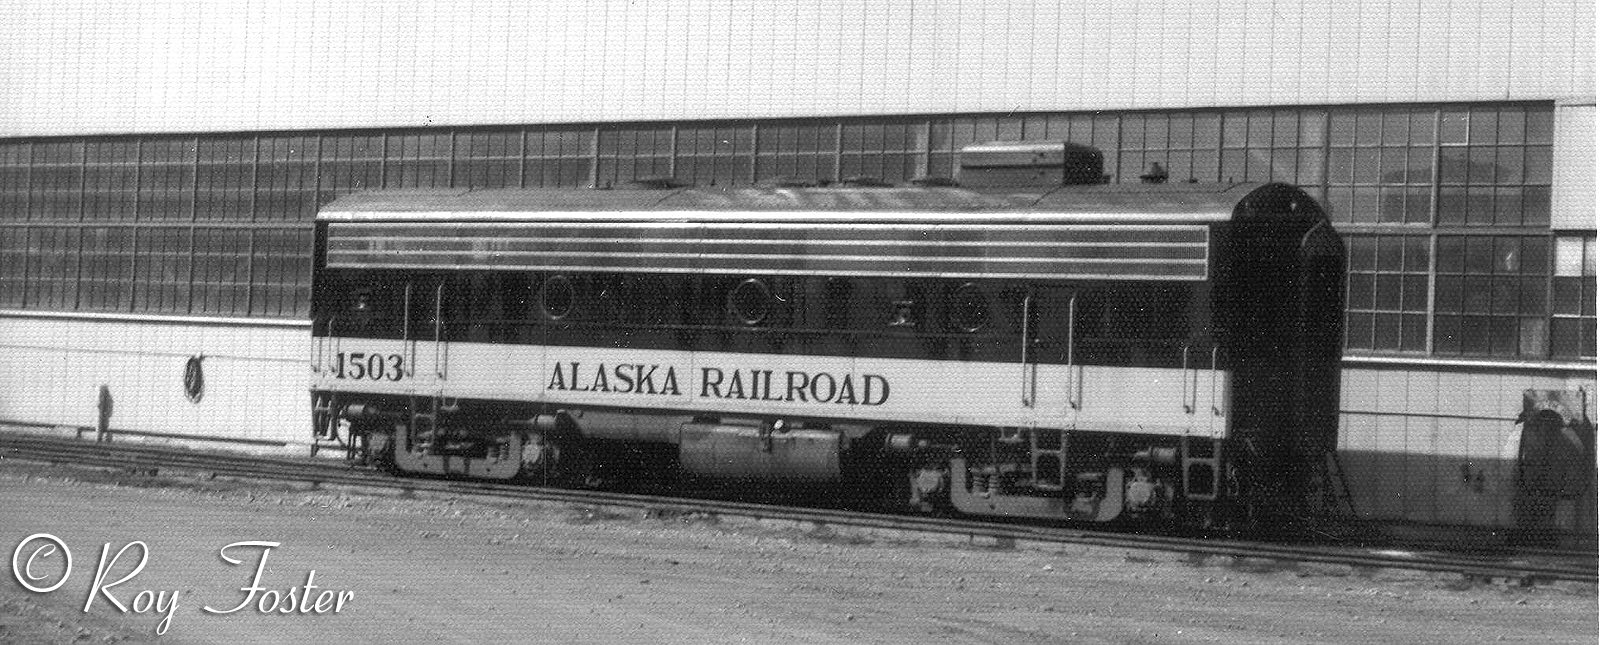 ARR 1503, Anchorage, 4-29-74